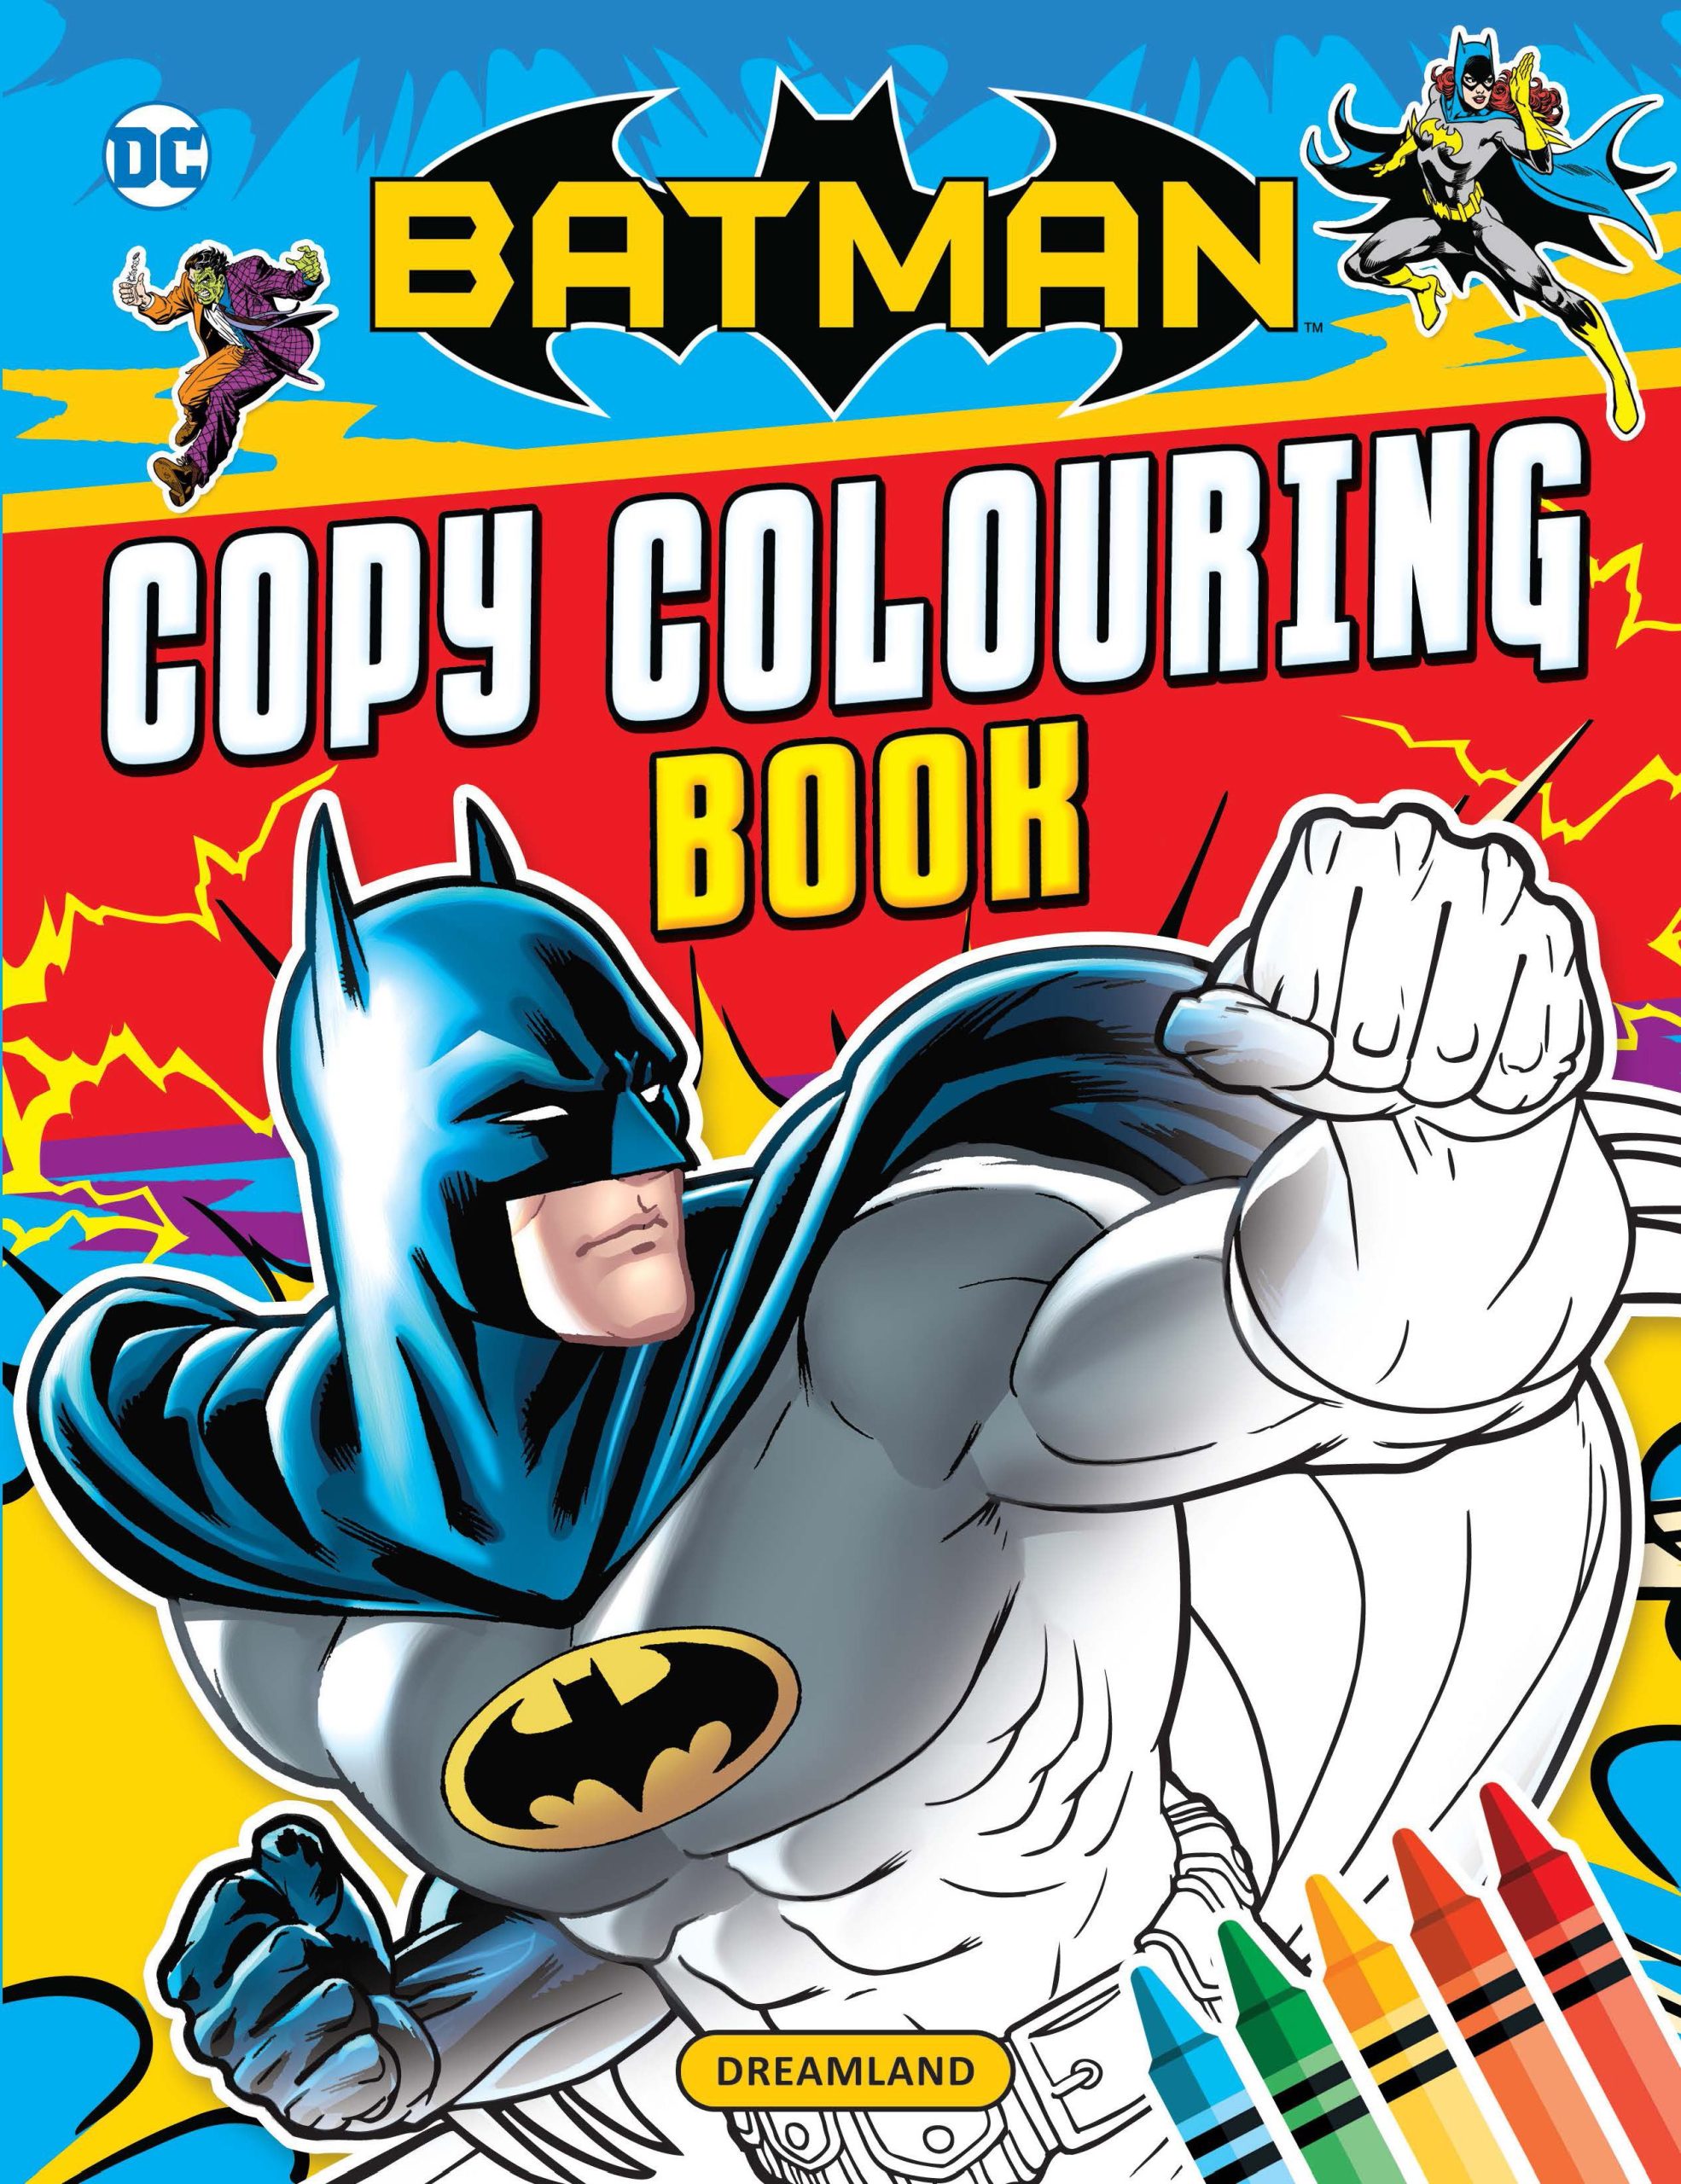 Batman Coloring Book for Kids: Buy Batman Coloring Book for Kids by Book  Coloring at Low Price in India | Flipkart.com